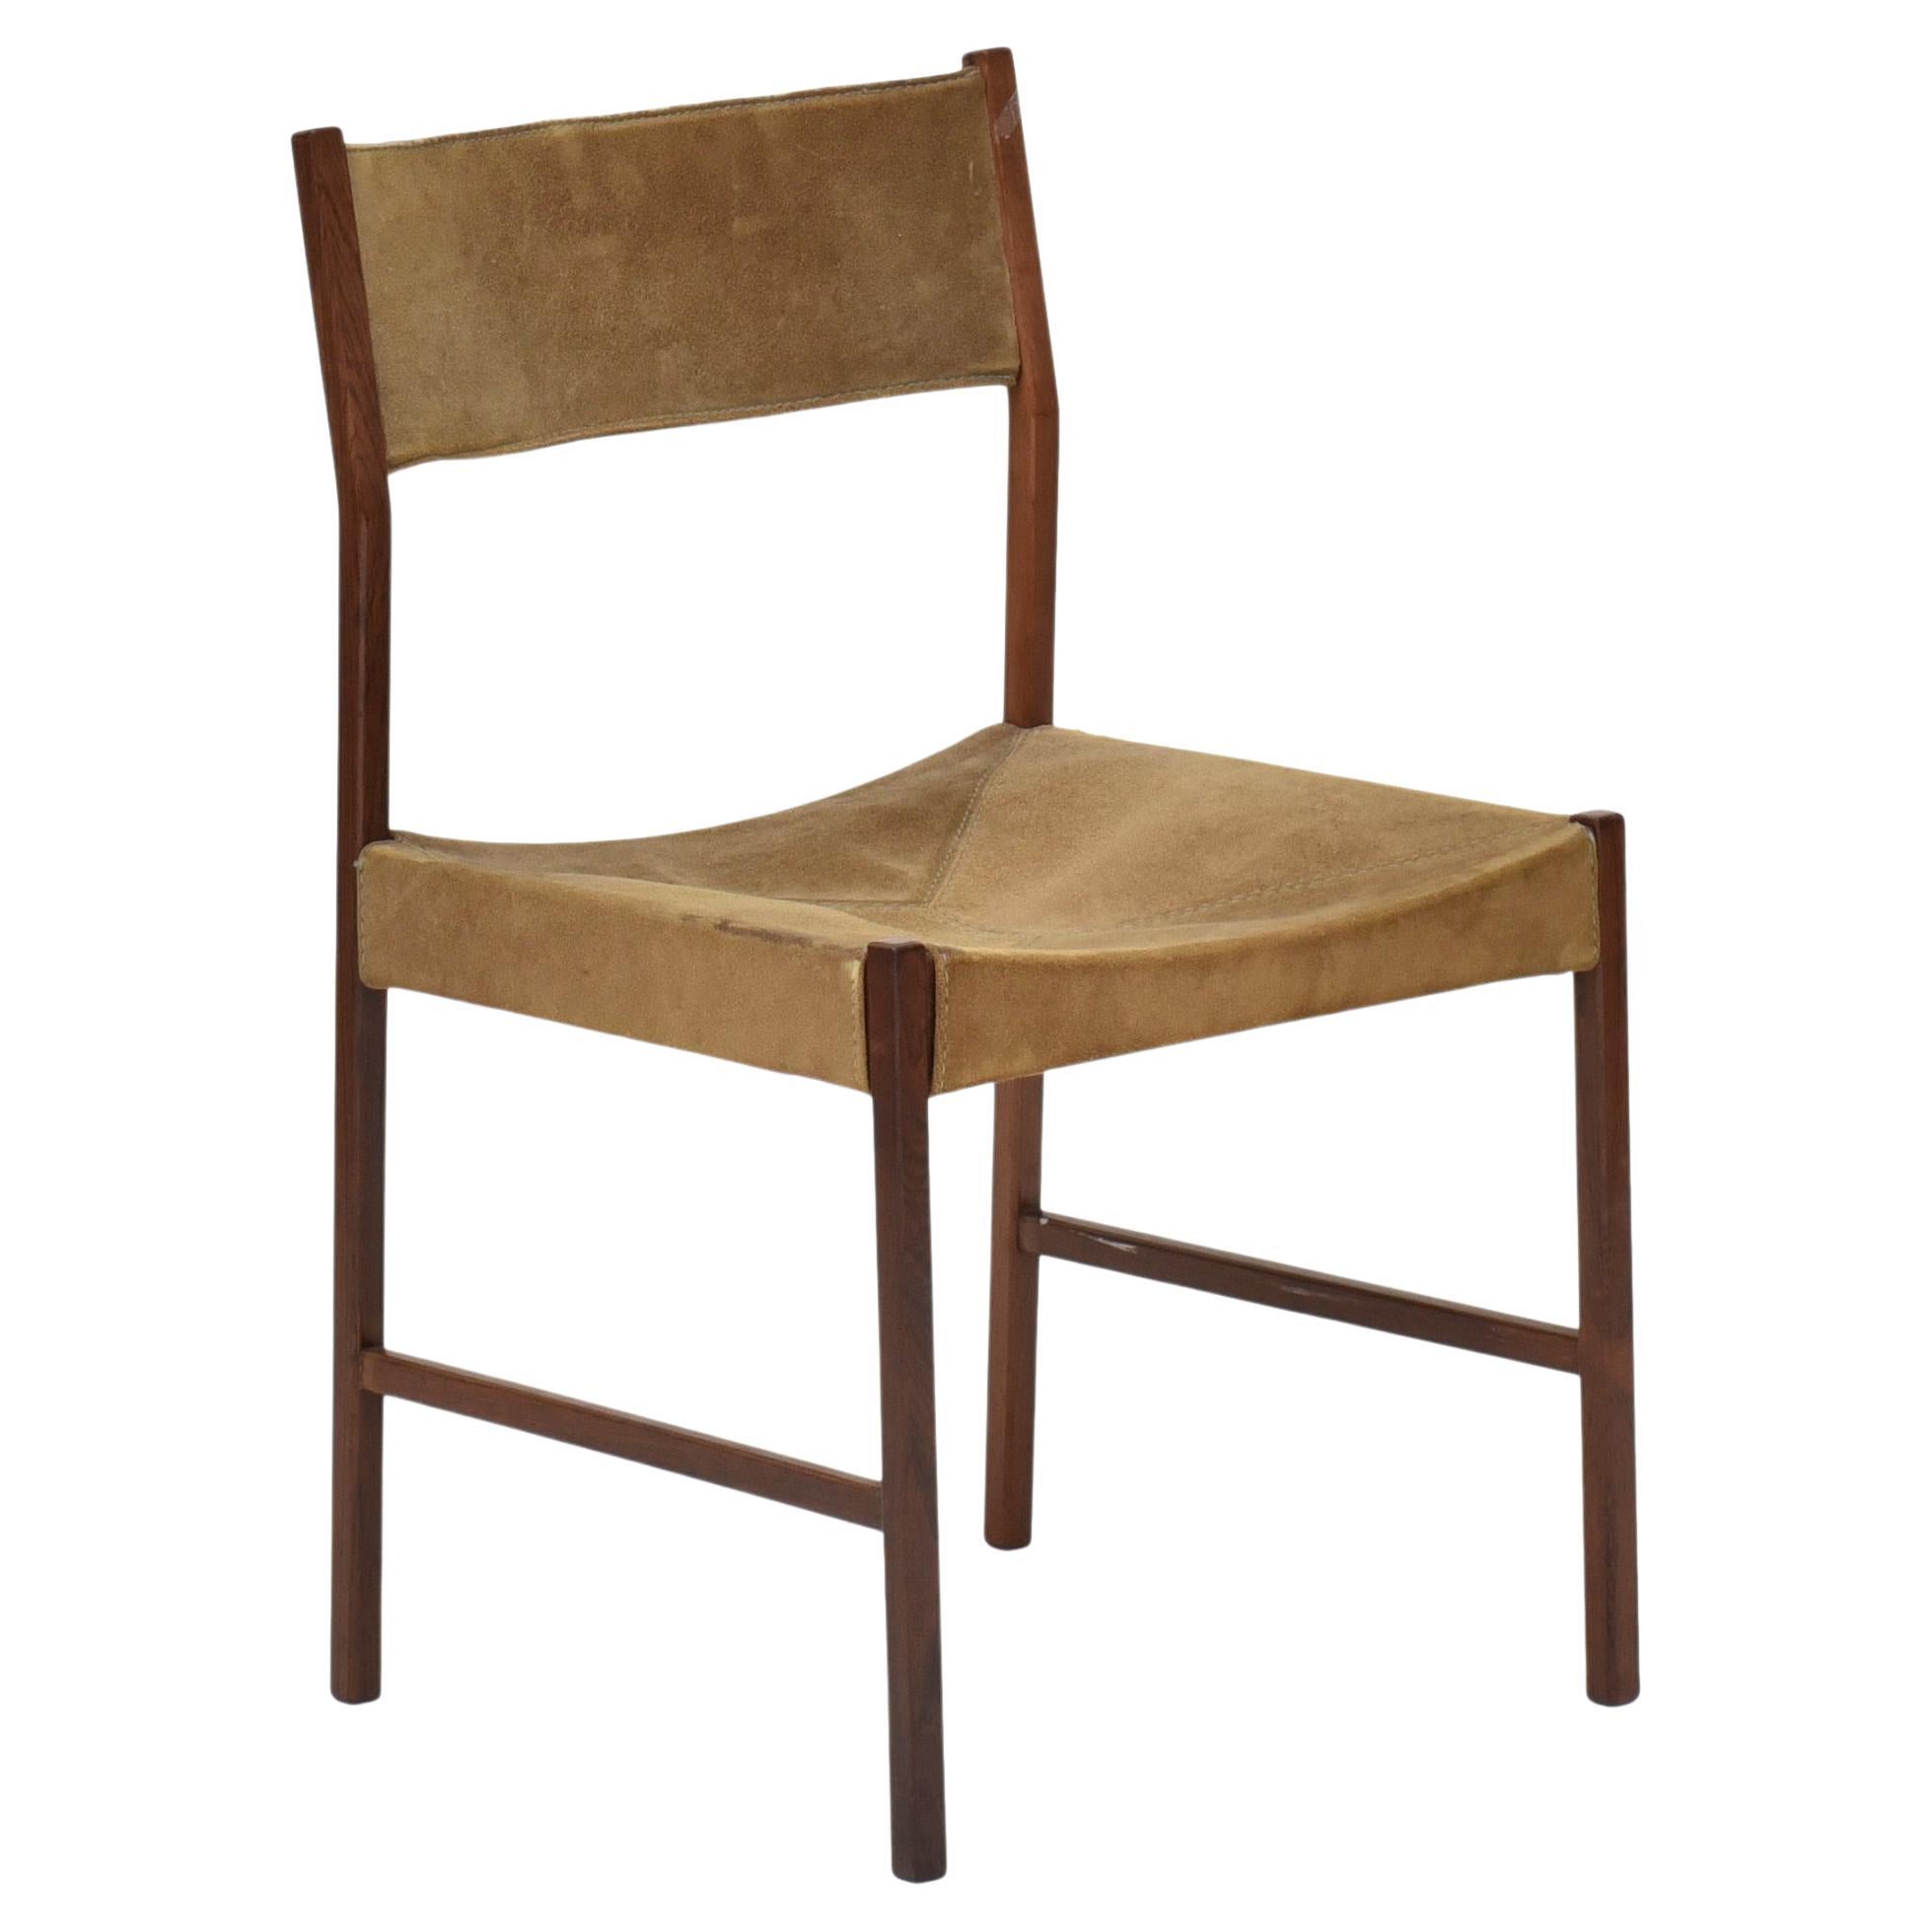 Chair "Itamaraty" in Brazilian Wood, by L'atelier - Jorge Zalszupin For Sale